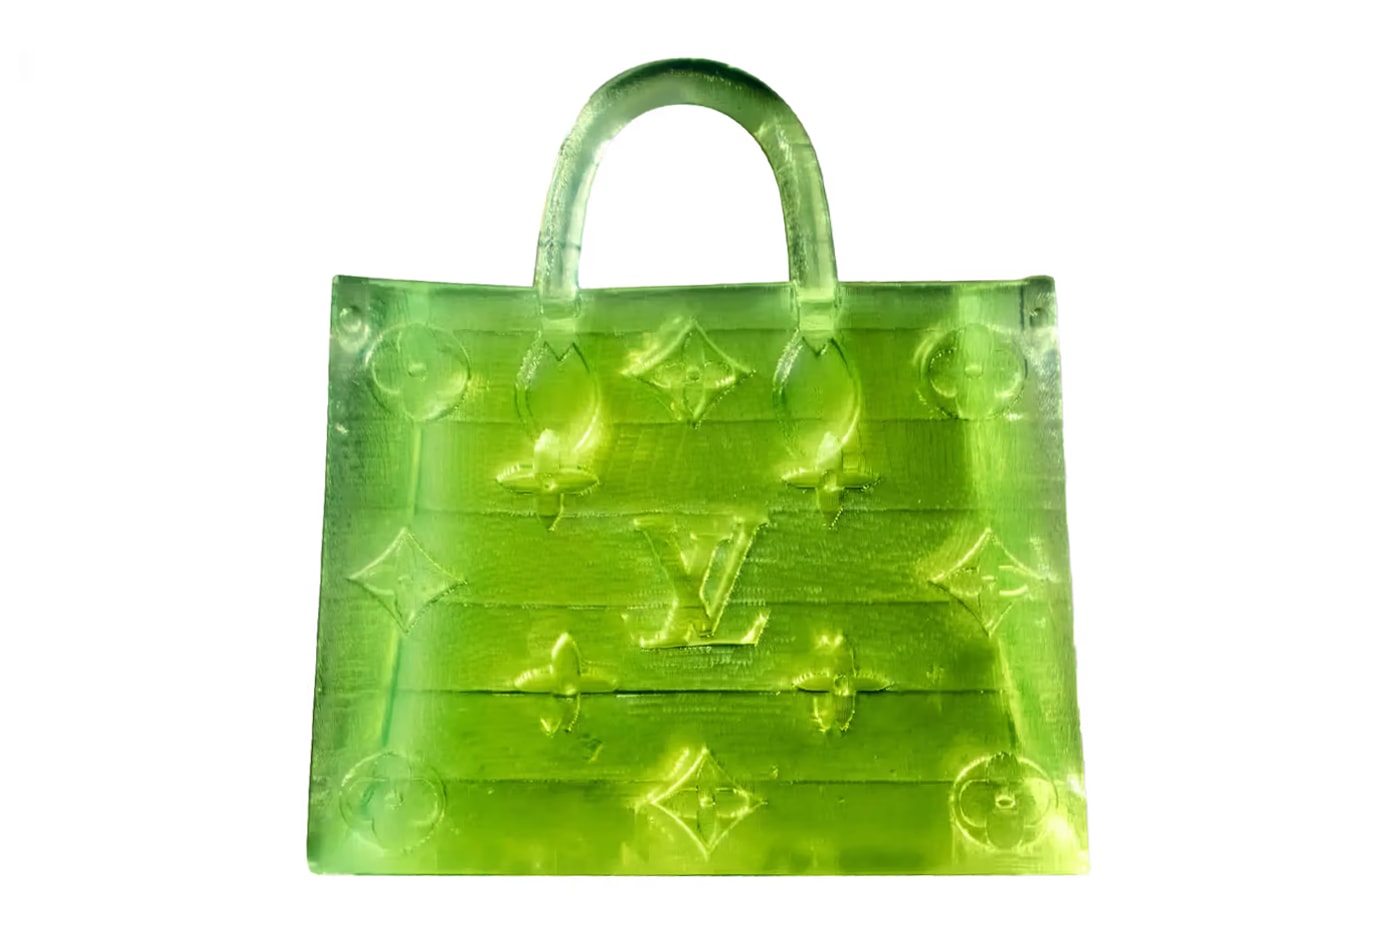 MSCHF Auctions Its Microscopic Handbag | Hypebeast